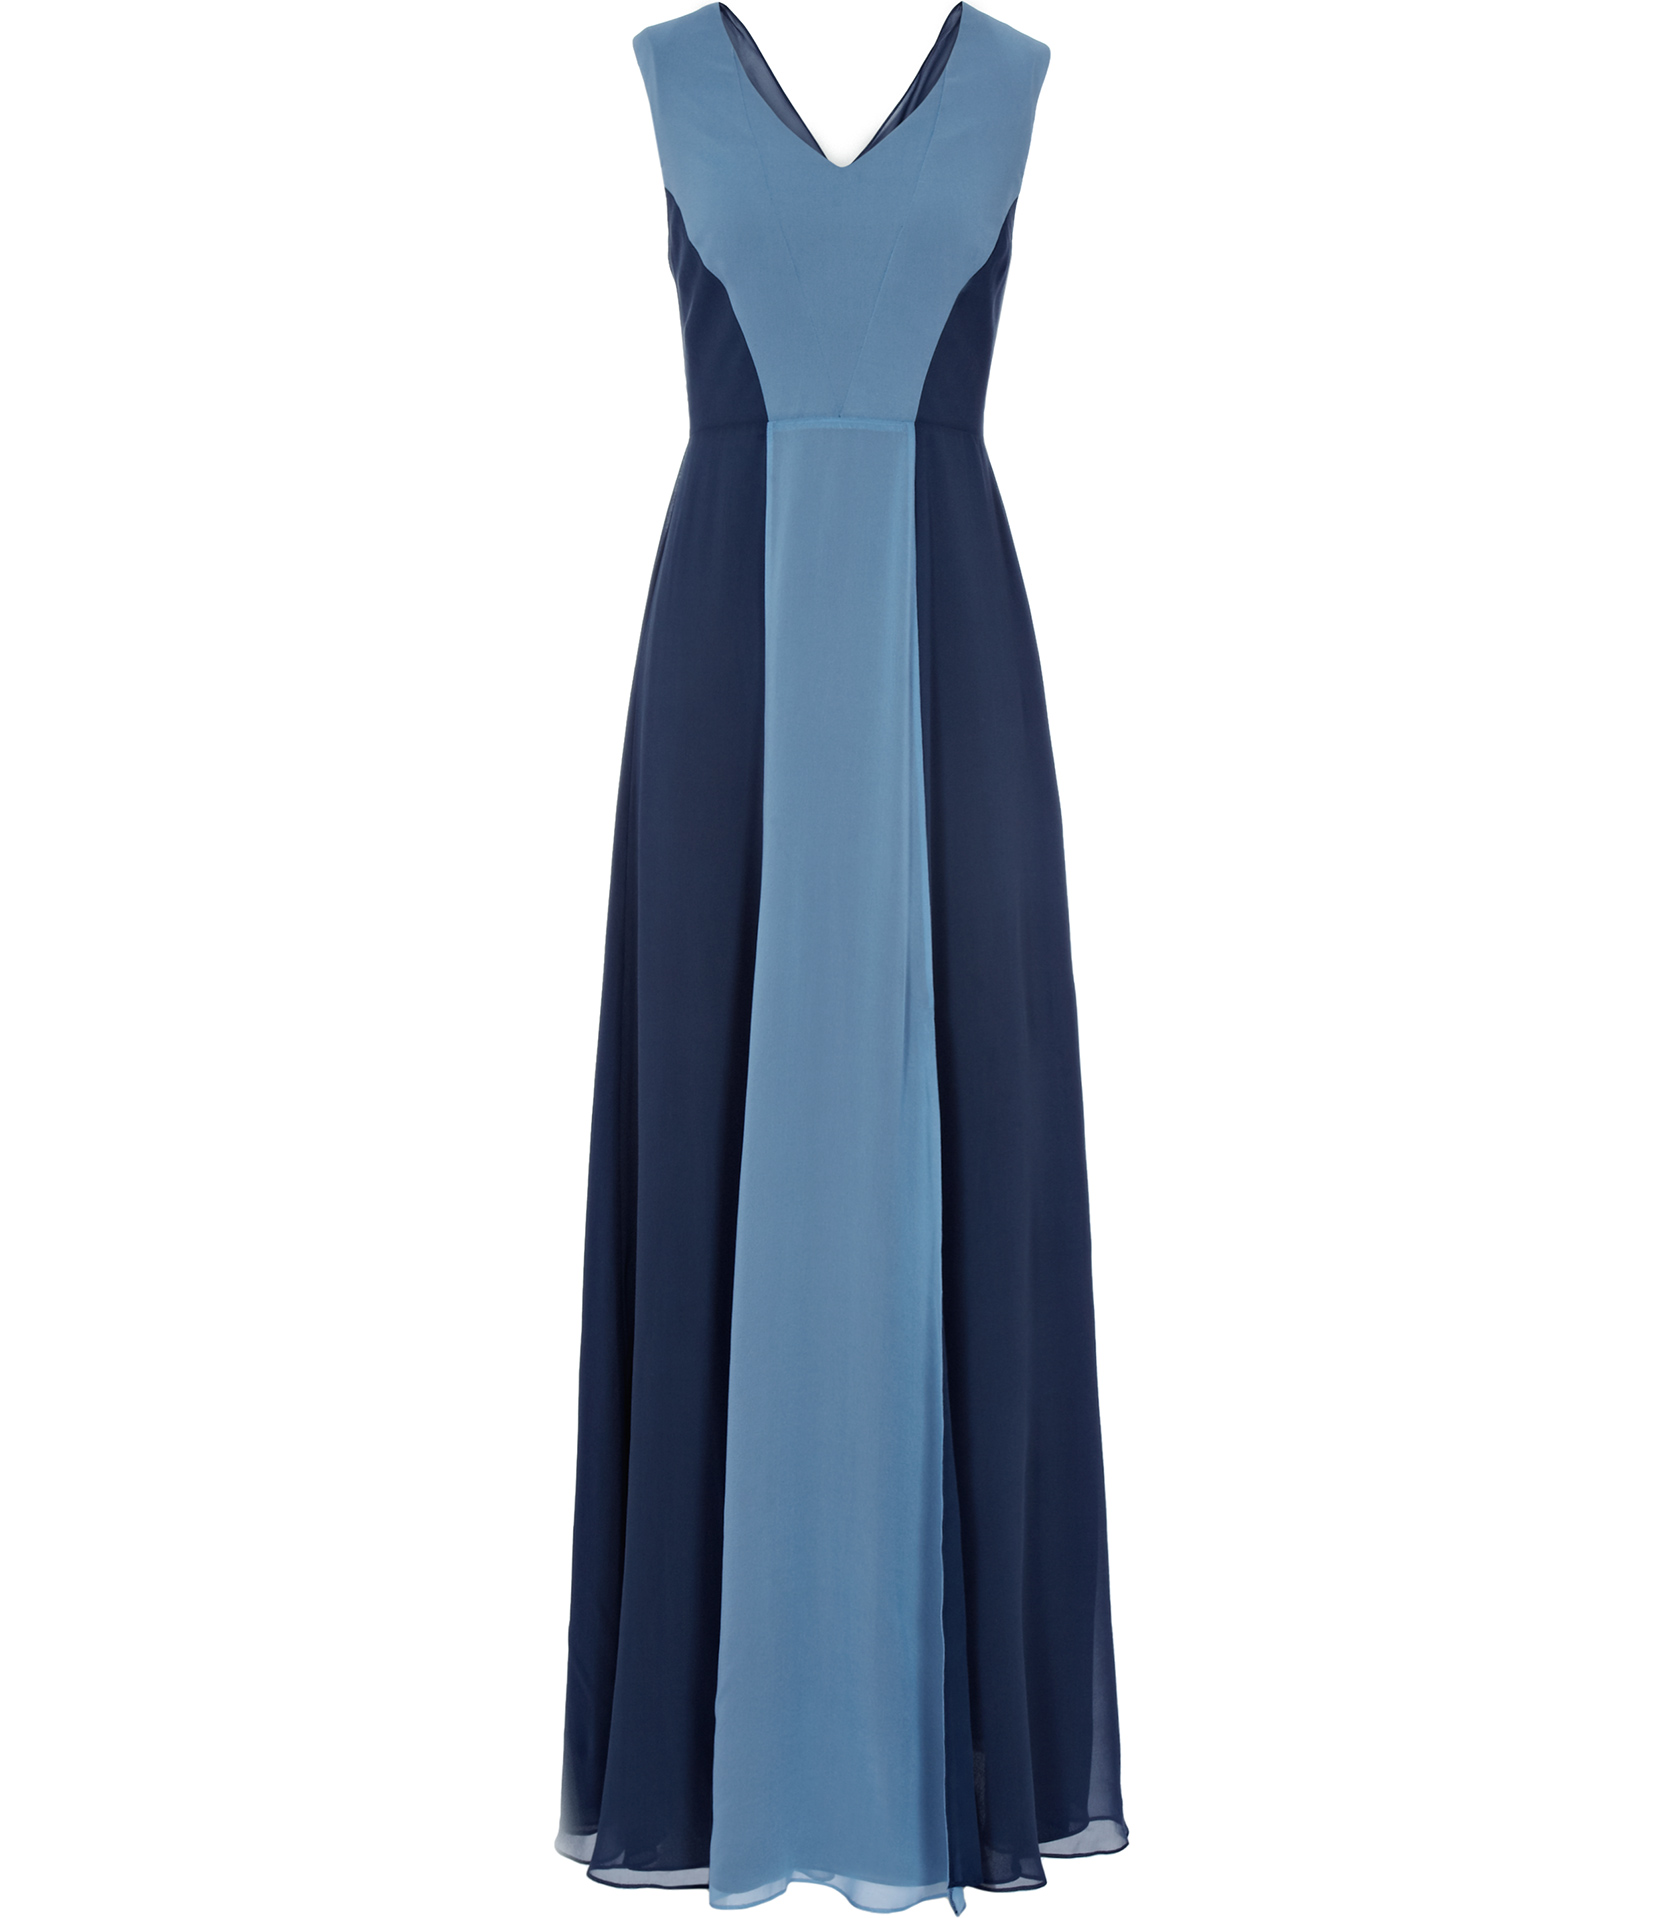 Reiss Alla Colour Block Maxi Dress in Indigo (Blue) - Lyst